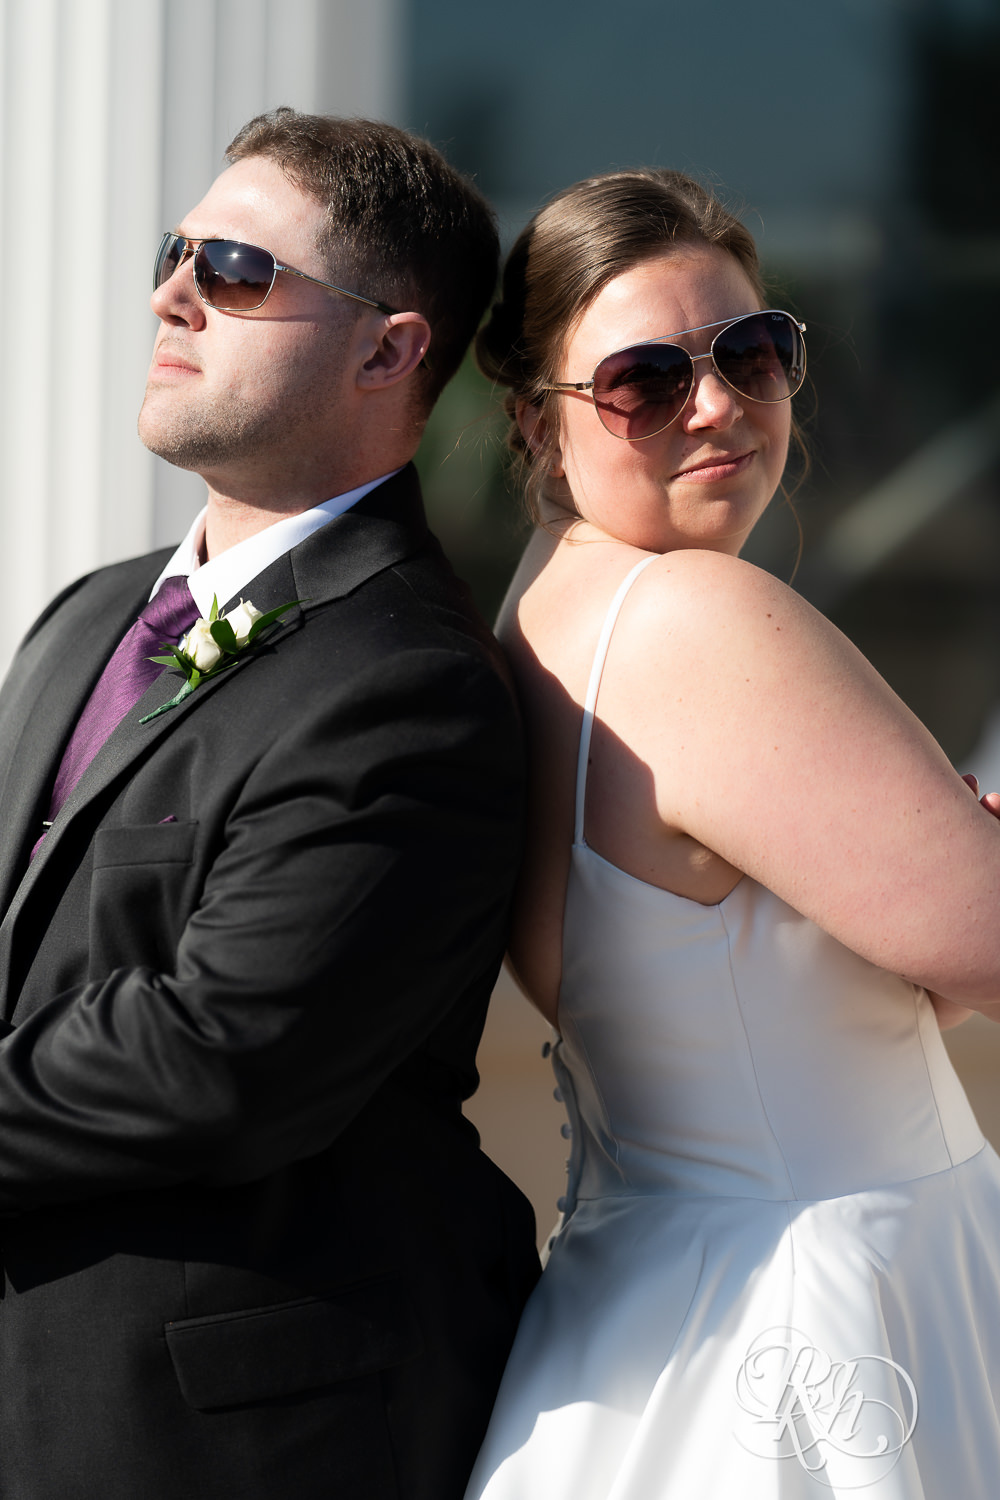 Bride and groom wearing sunglasses at wedding at Como Zoo in Saint Paul, Minnesota.